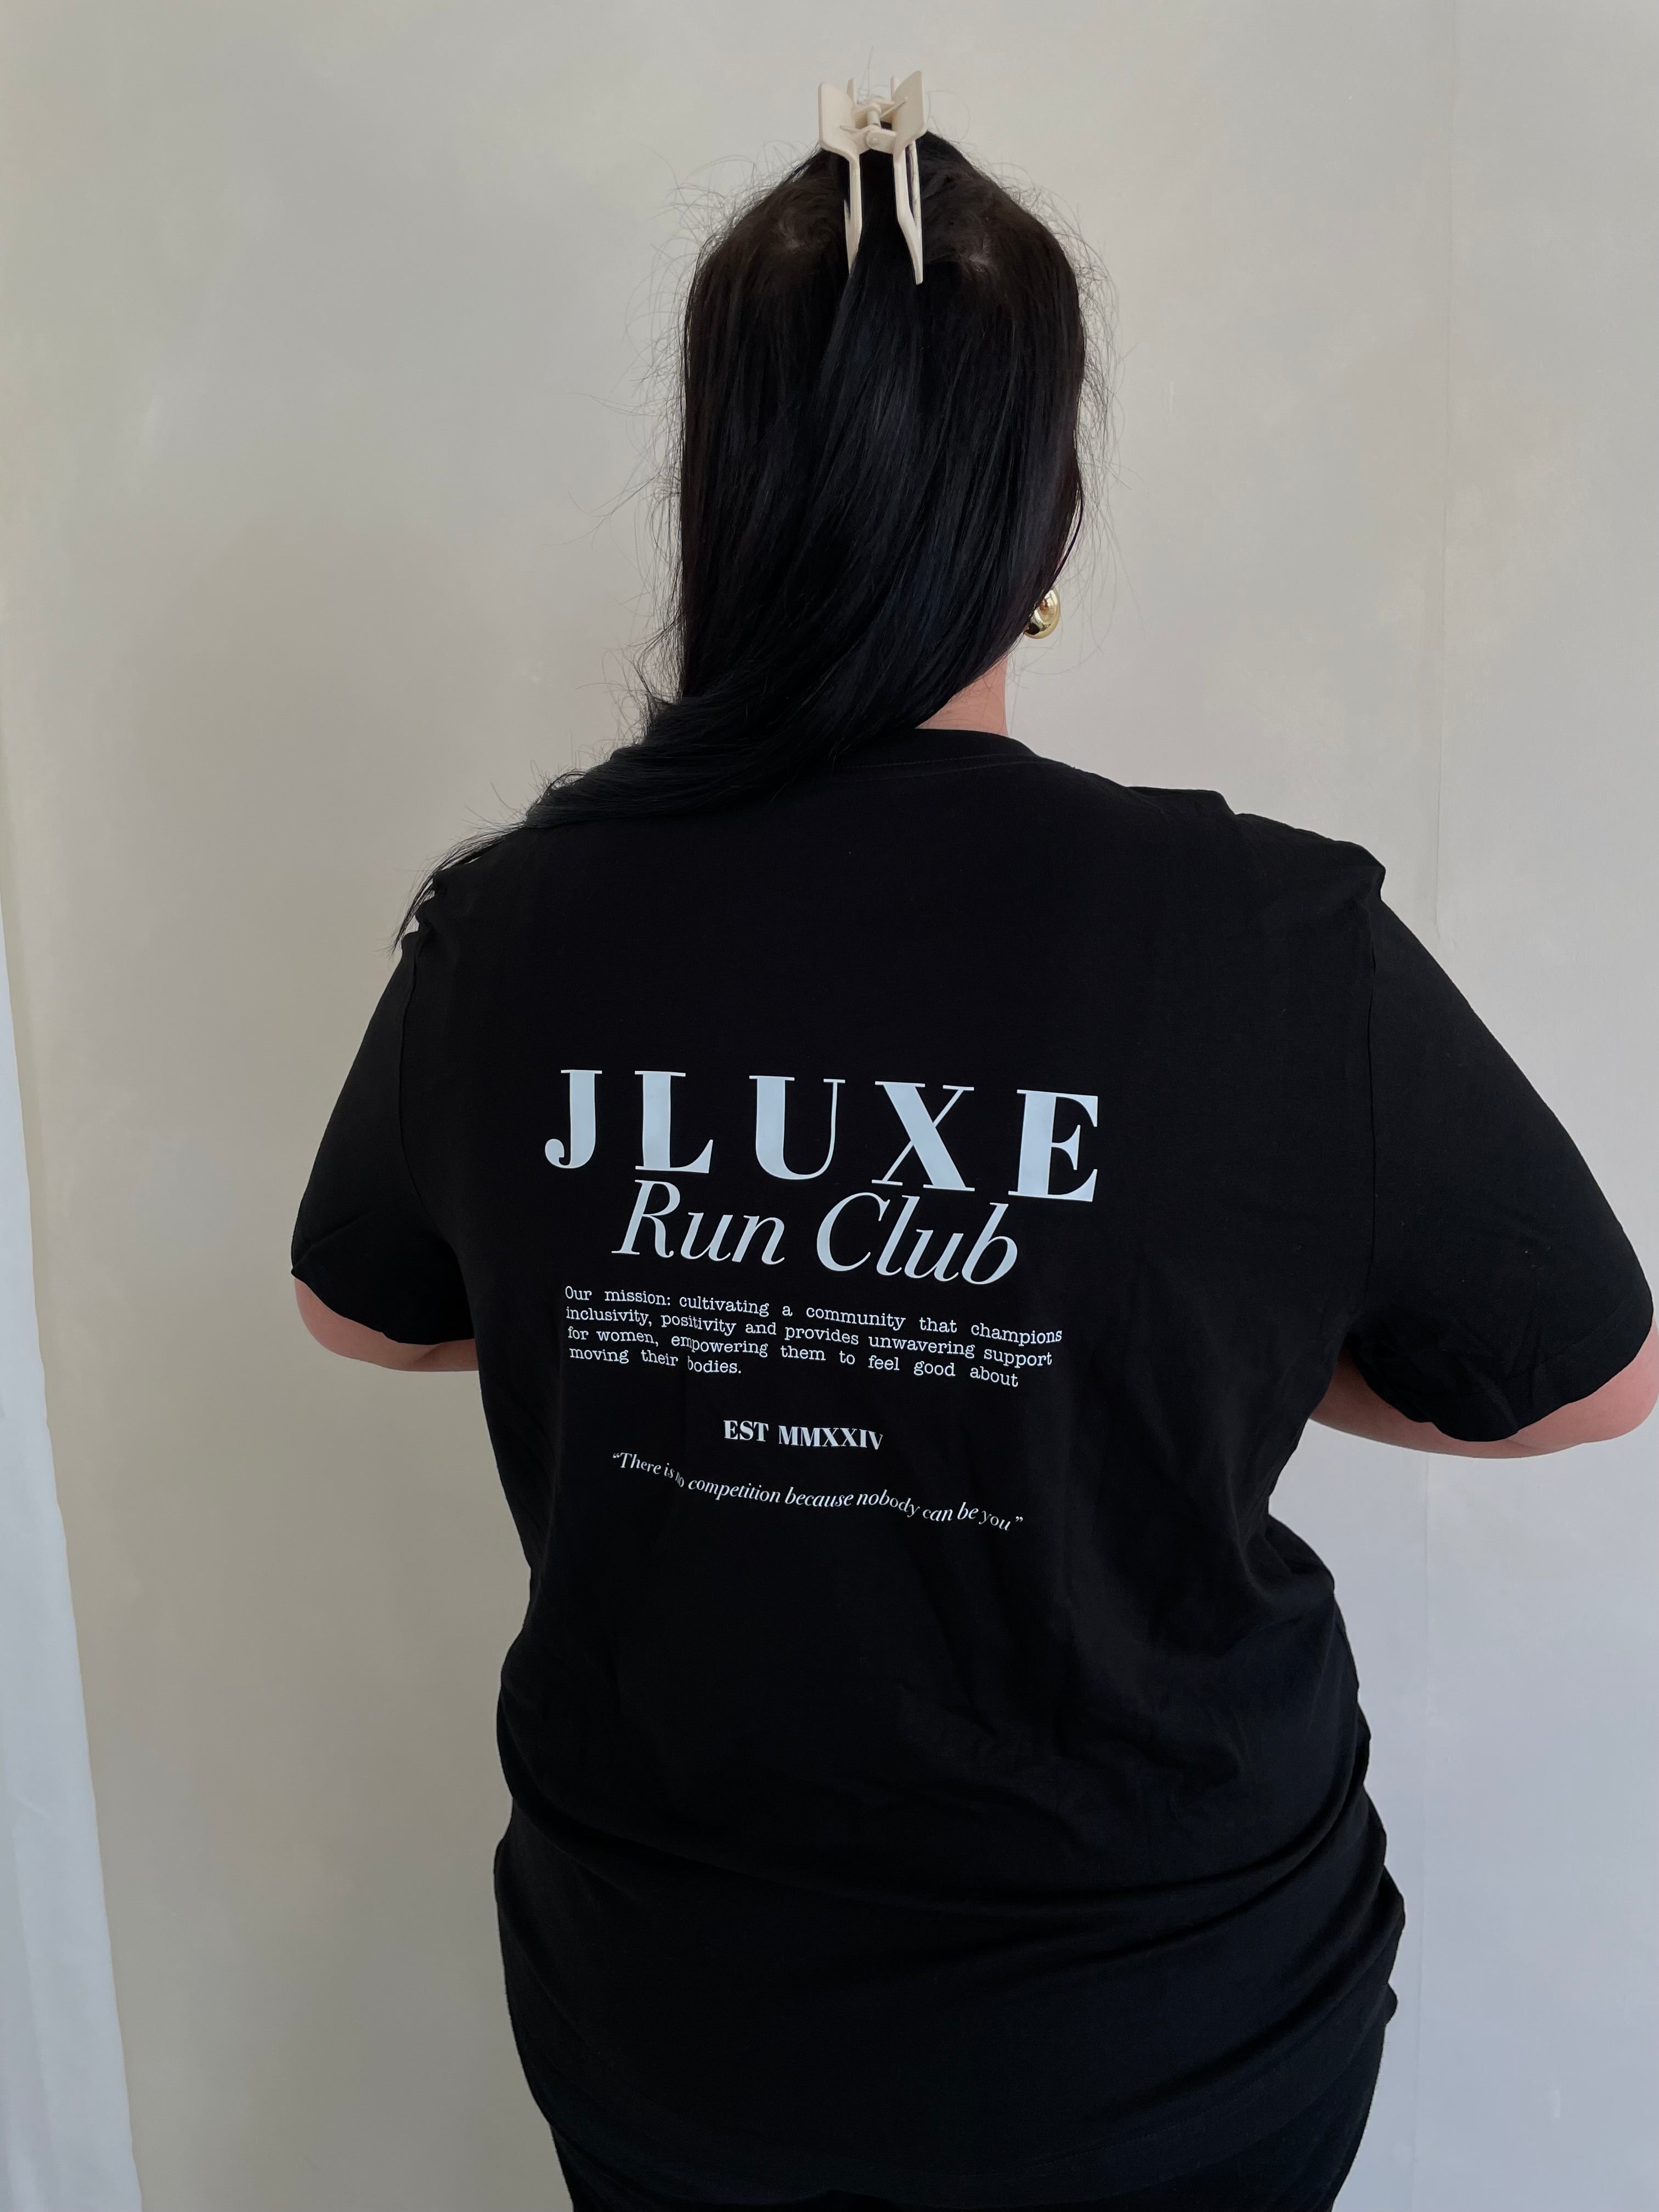 Run Club Graphic Print T-Shirt - Made To Order